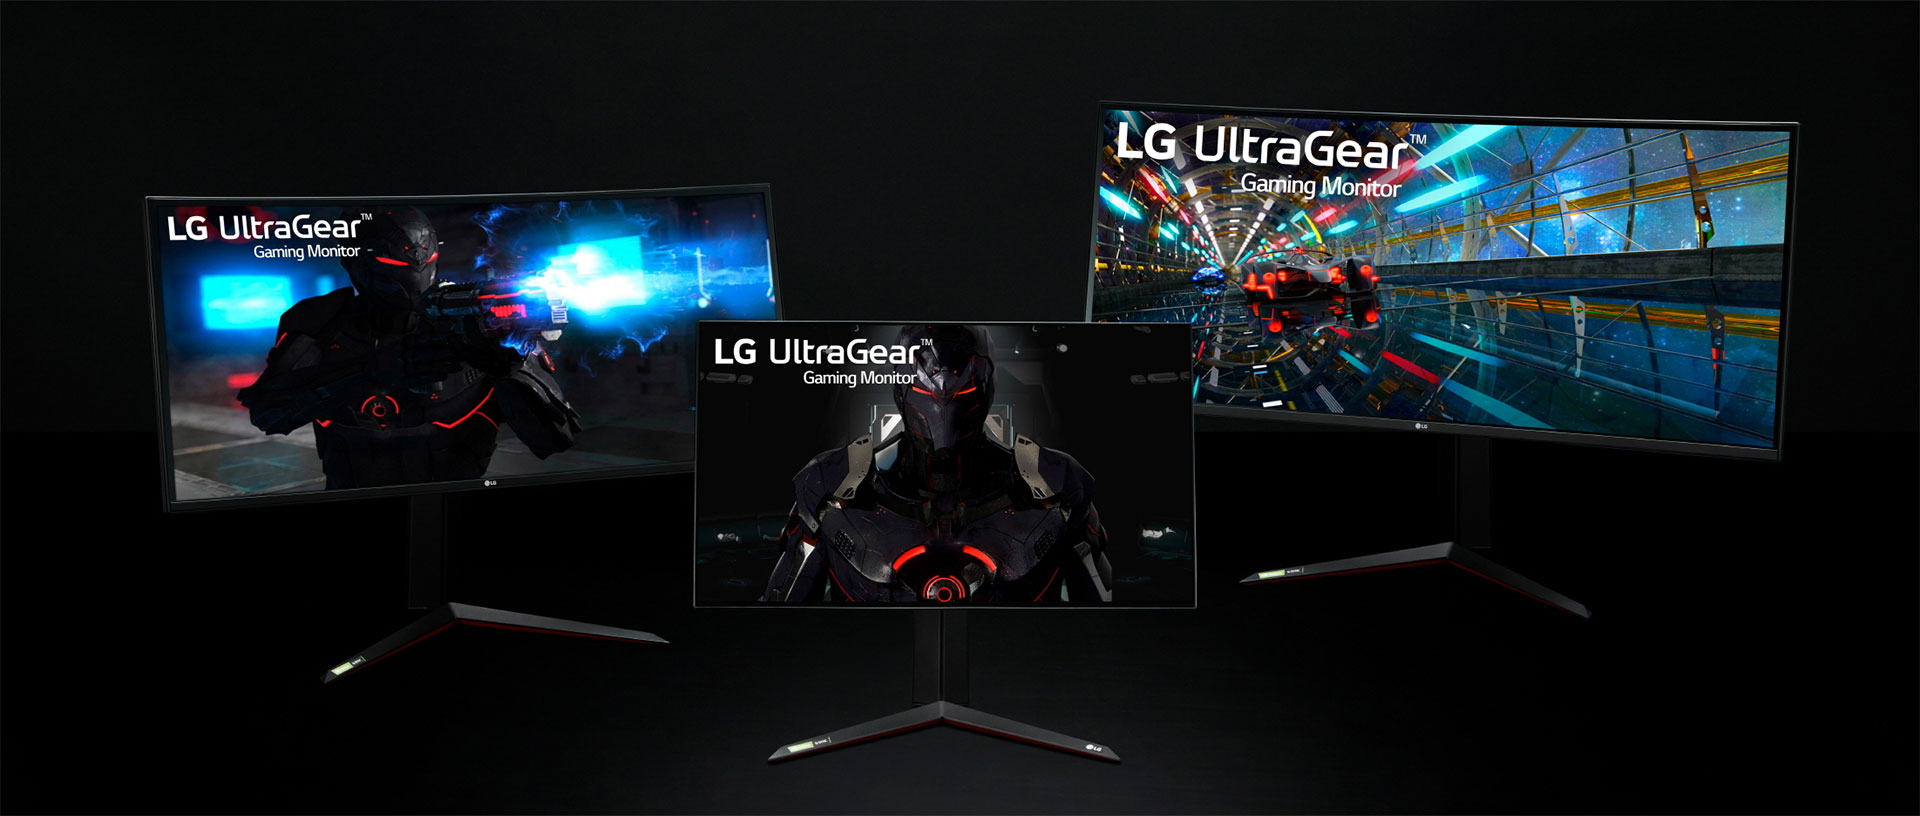 LG UltraGear 2020 Lijn